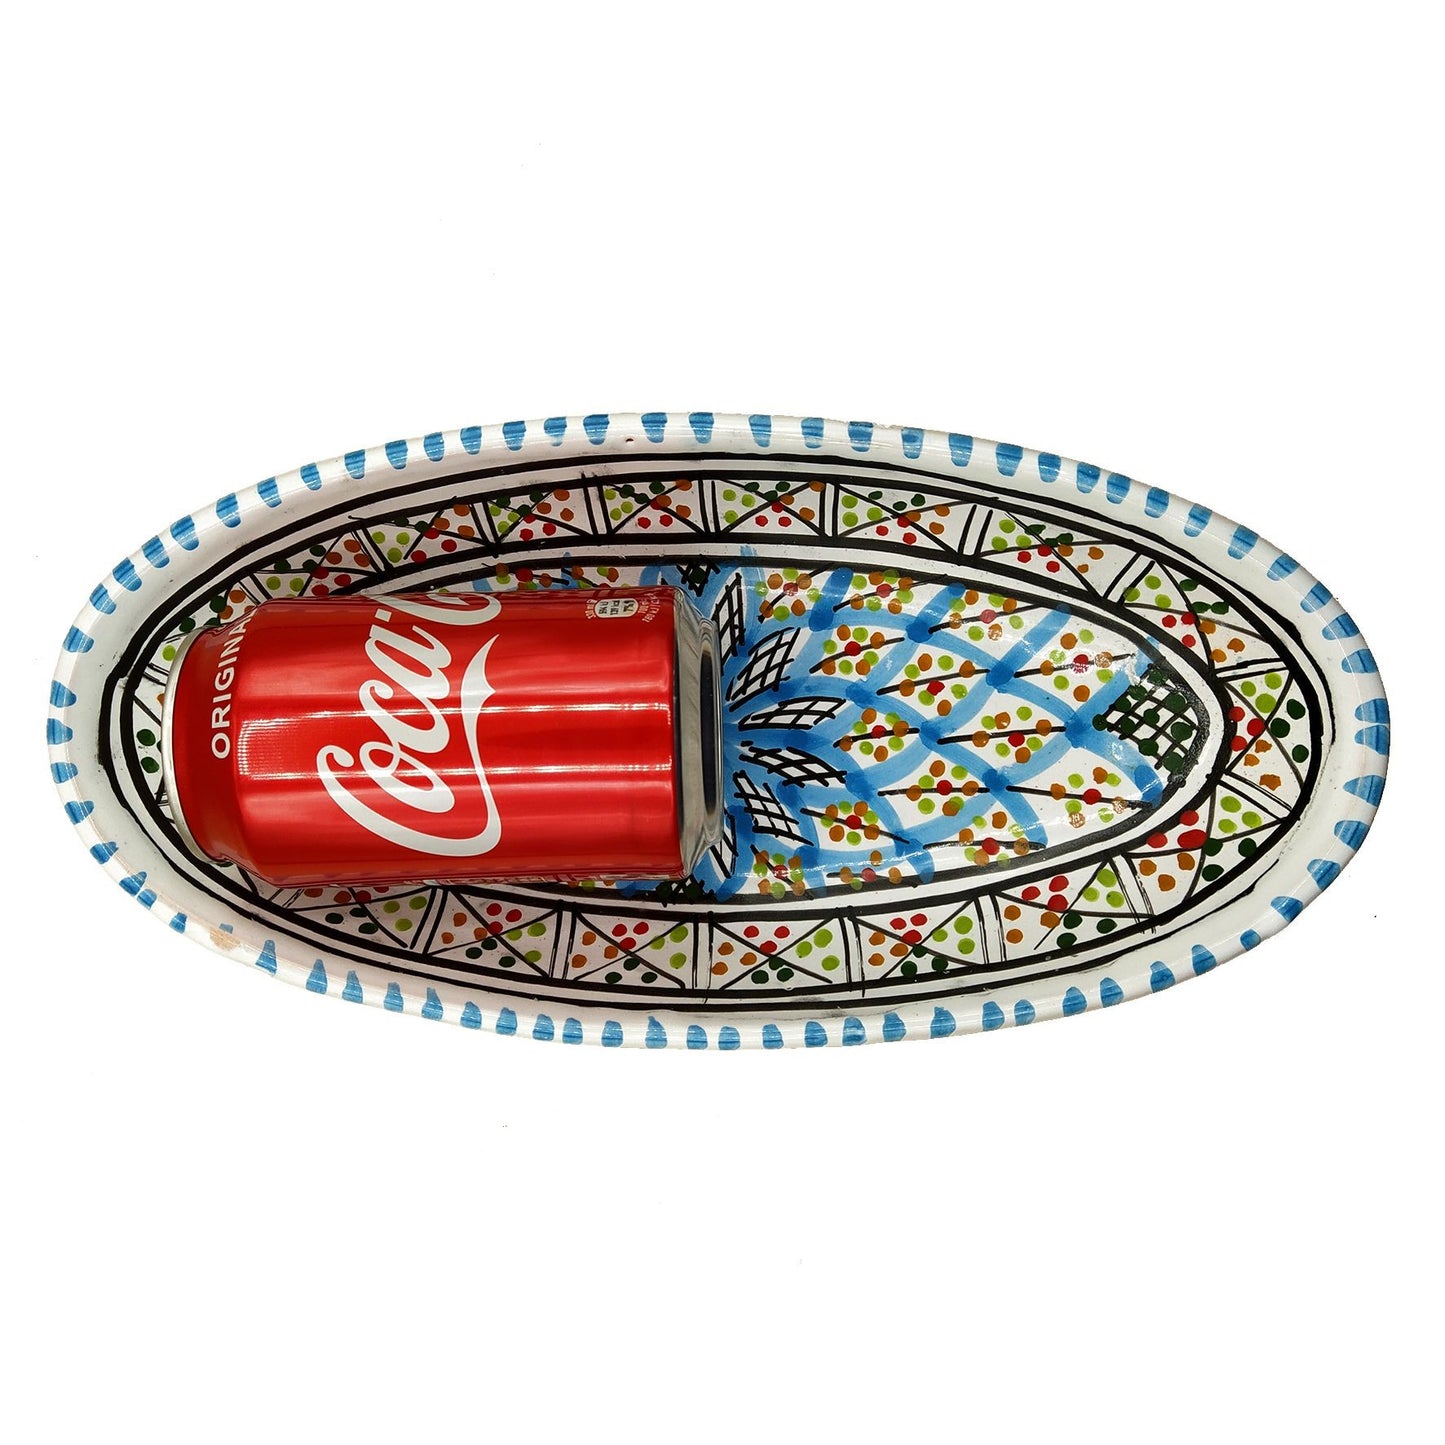 Sprolunga keramiek decoratief bord Marokkaans Tunesisch 1201211308